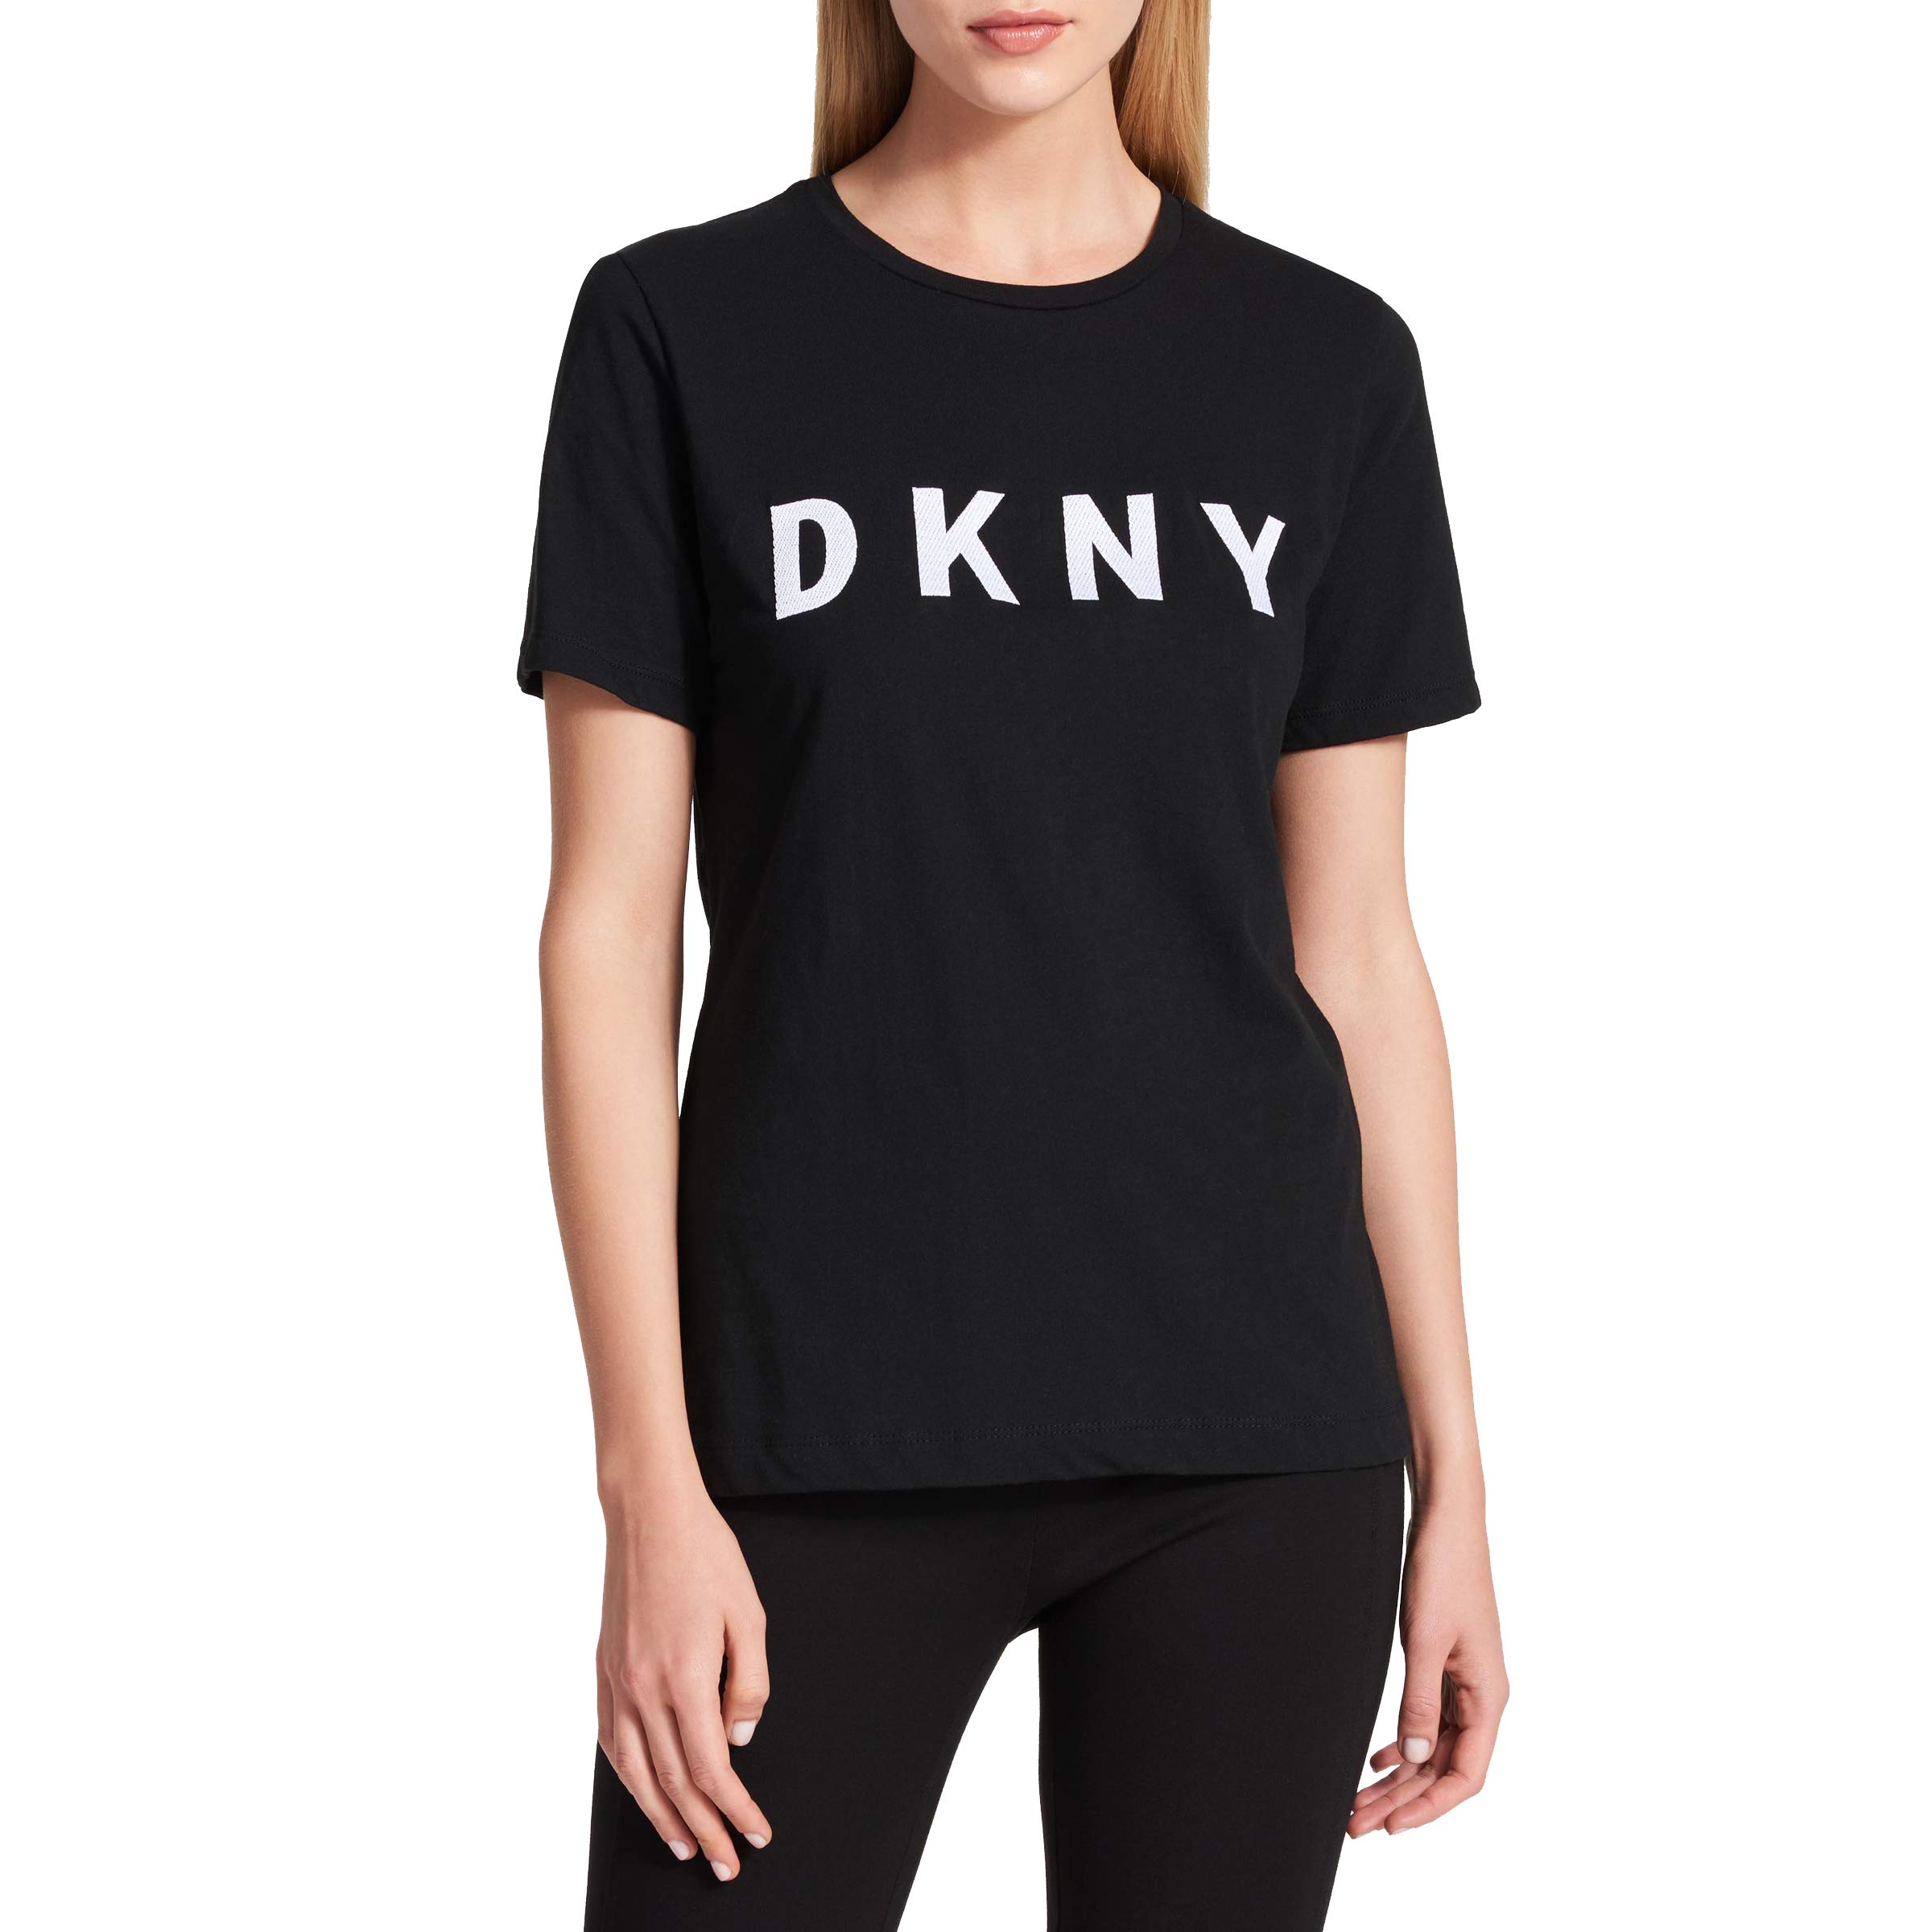 DKNY Women's Short Sleeve Logo T-shirt, Black, M